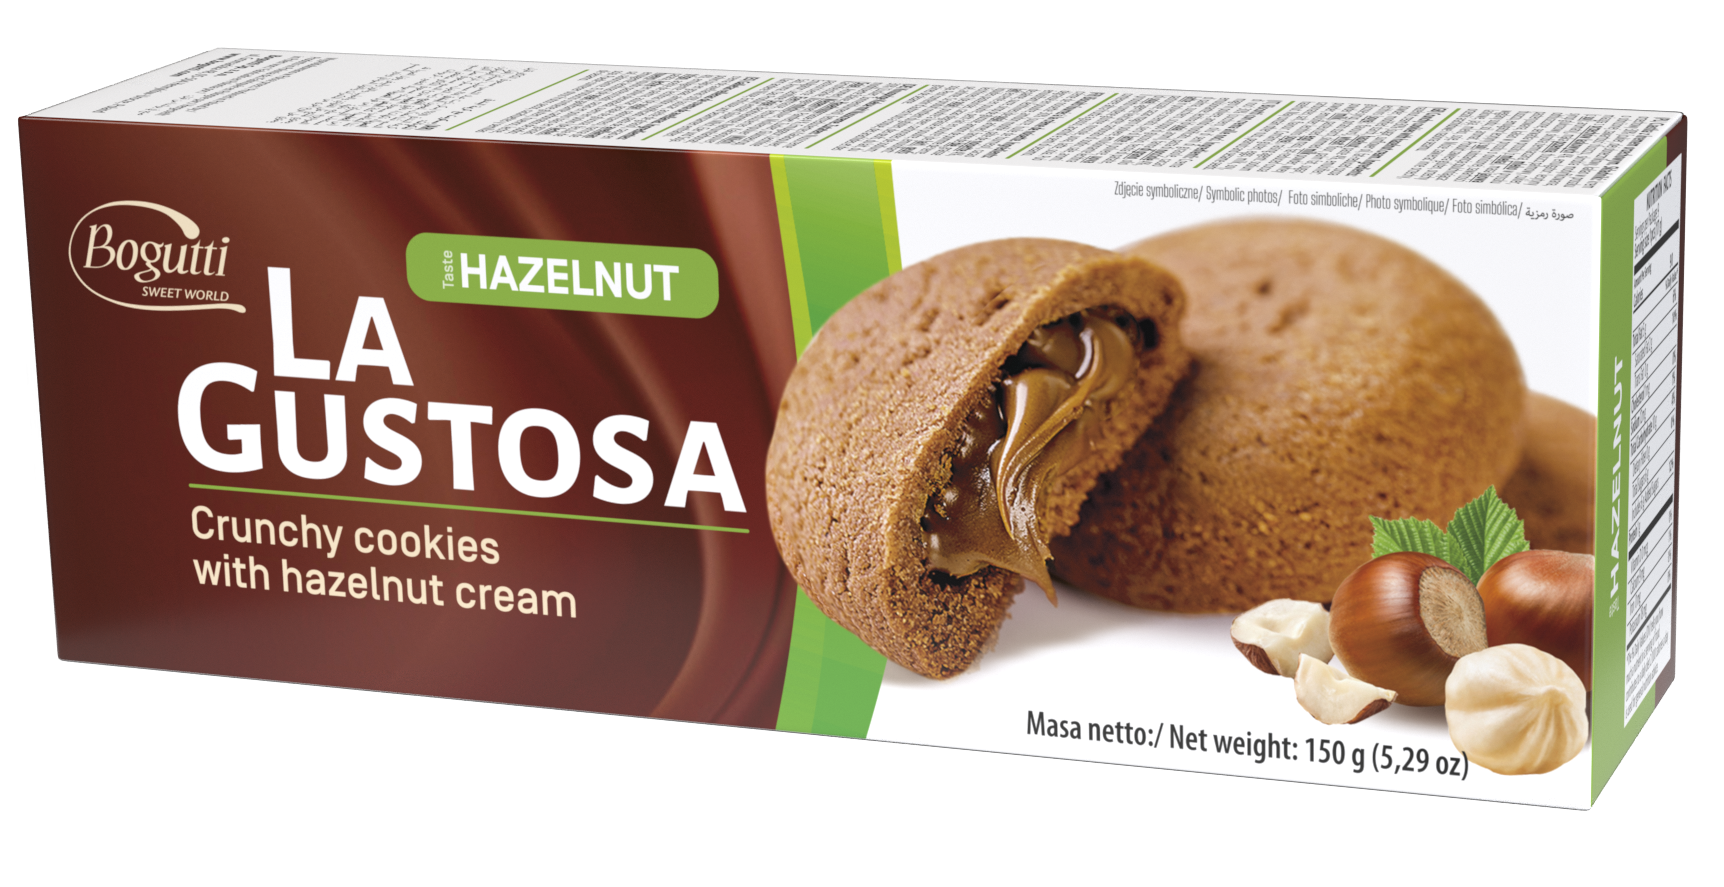 La Gustosa – Crunchy cookies with hazelnut cream